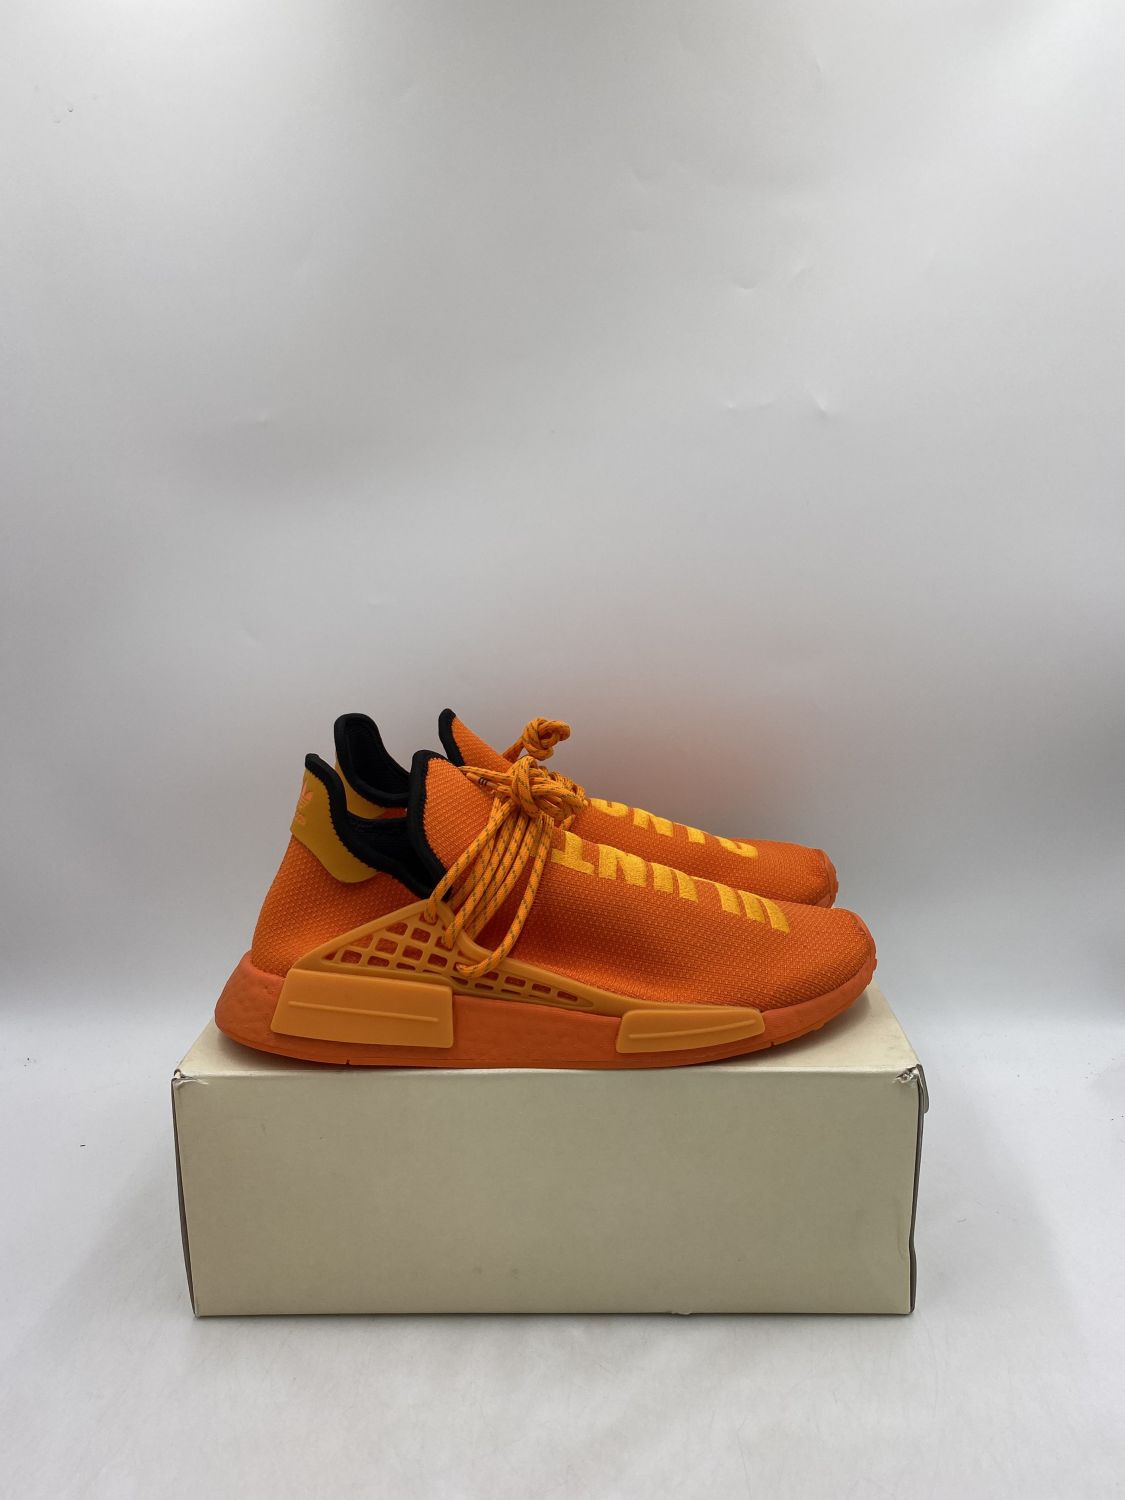 Pharrell adidas NMD Hu Orange GY0095 Release